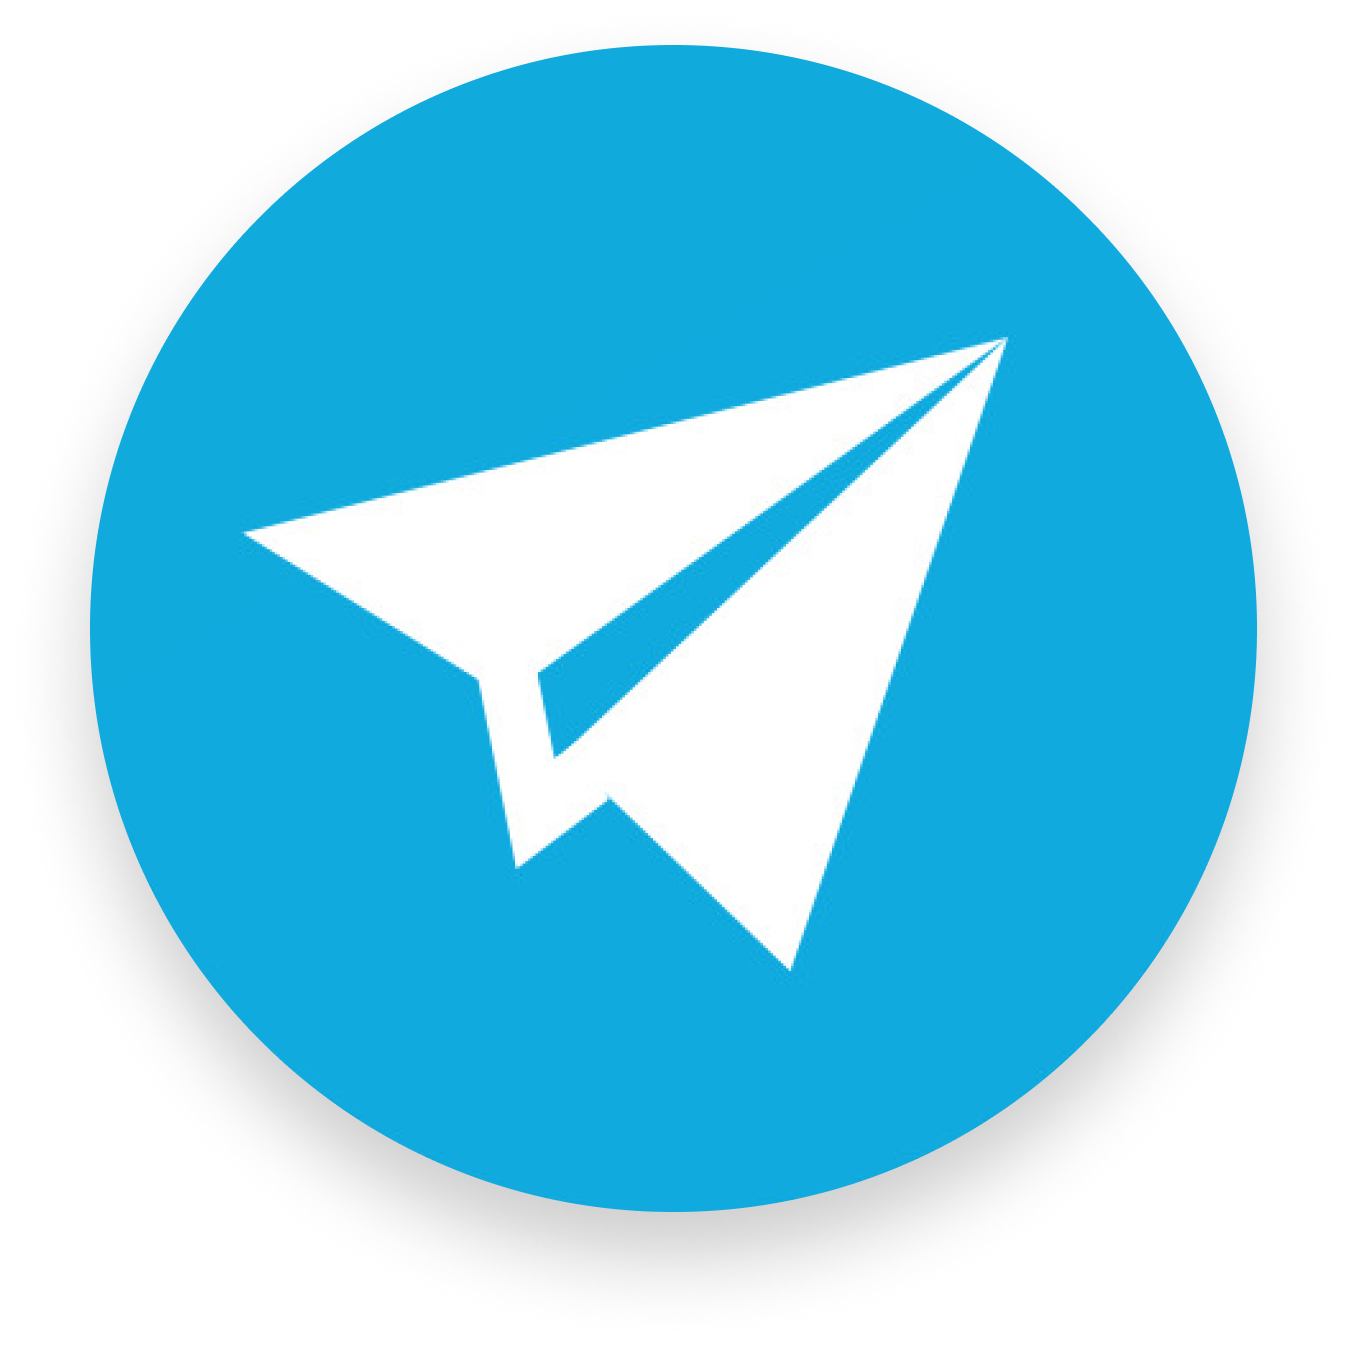 Картинка телеграм. Логотип телеграмма. Телеграмм без фона. Иконка Telegram. Телеграмм на прозрачном фоне.